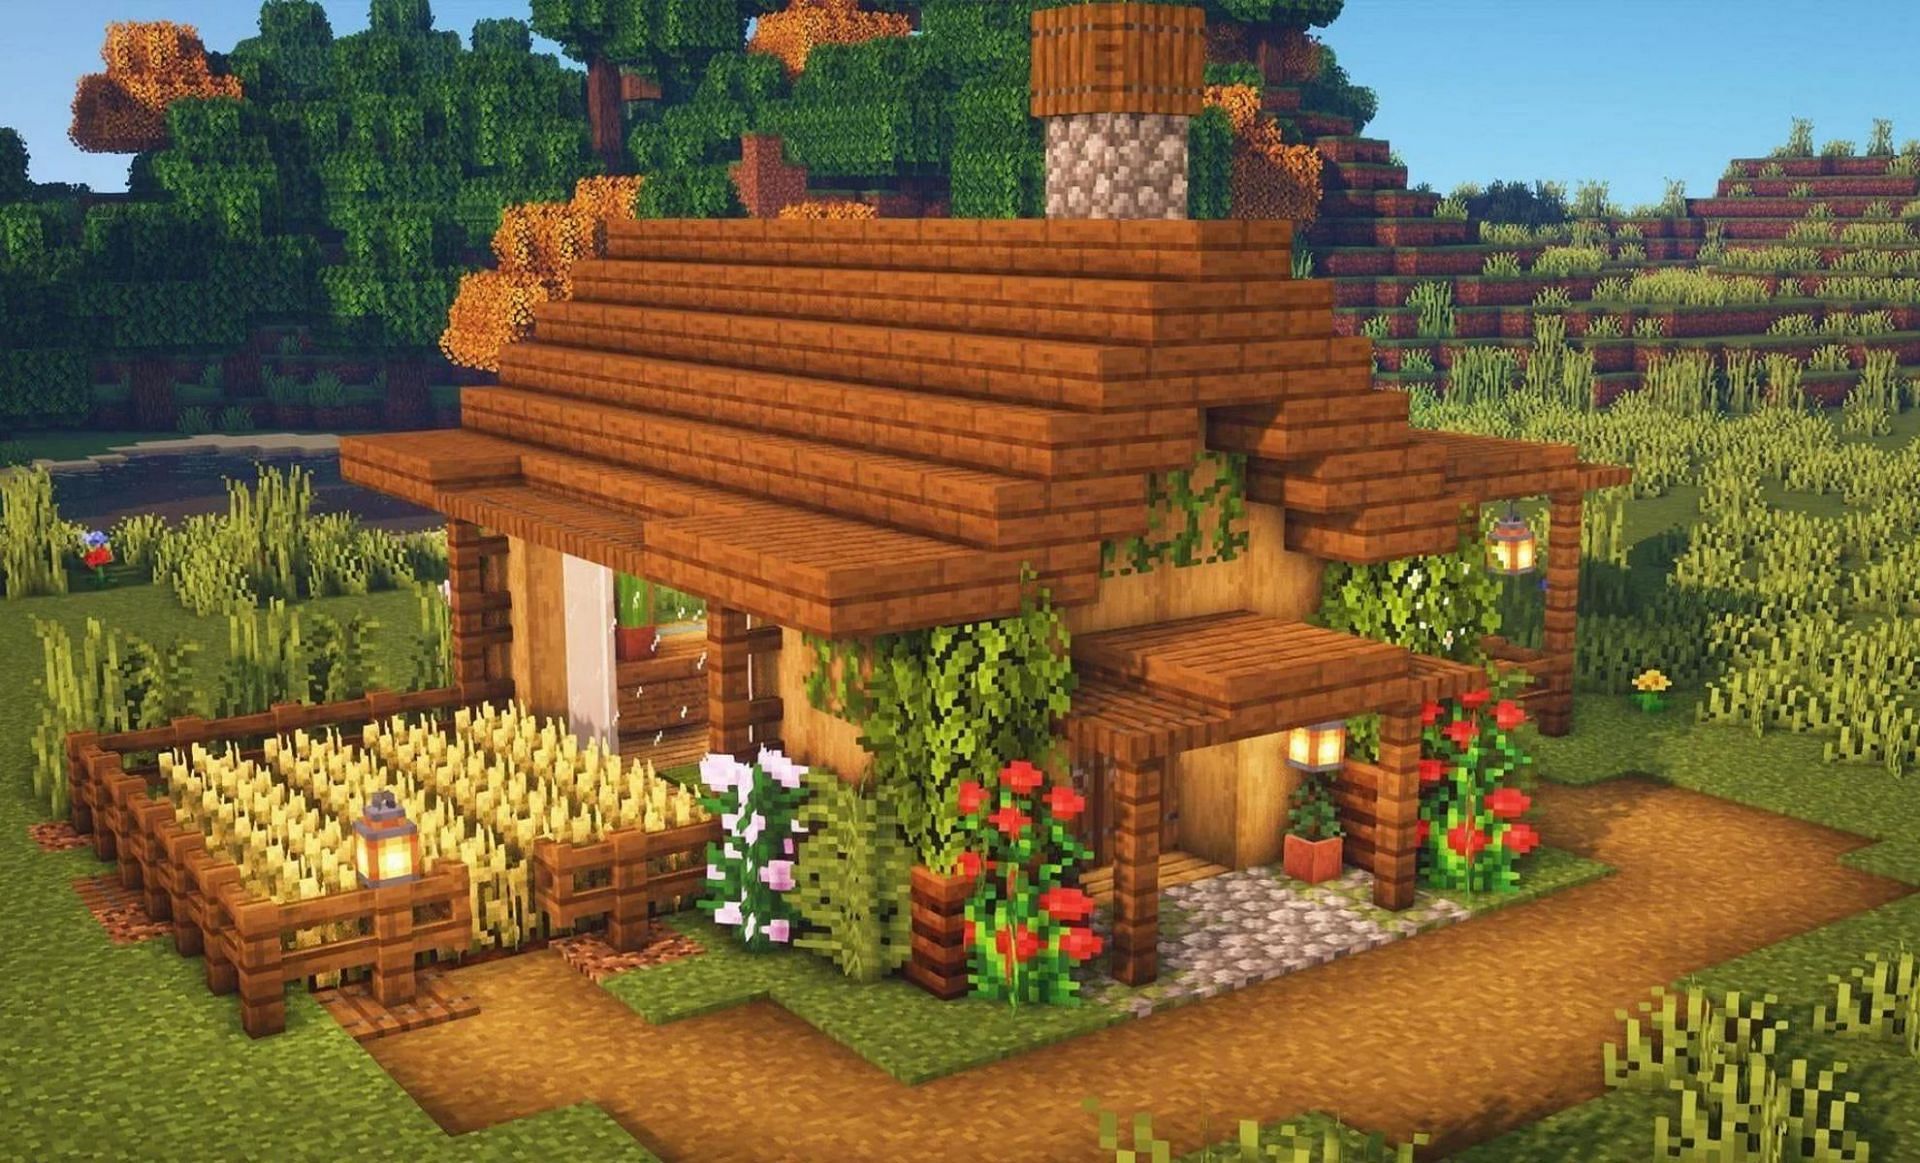 Cottage design (Image via u/eiro-gg on Reddit)